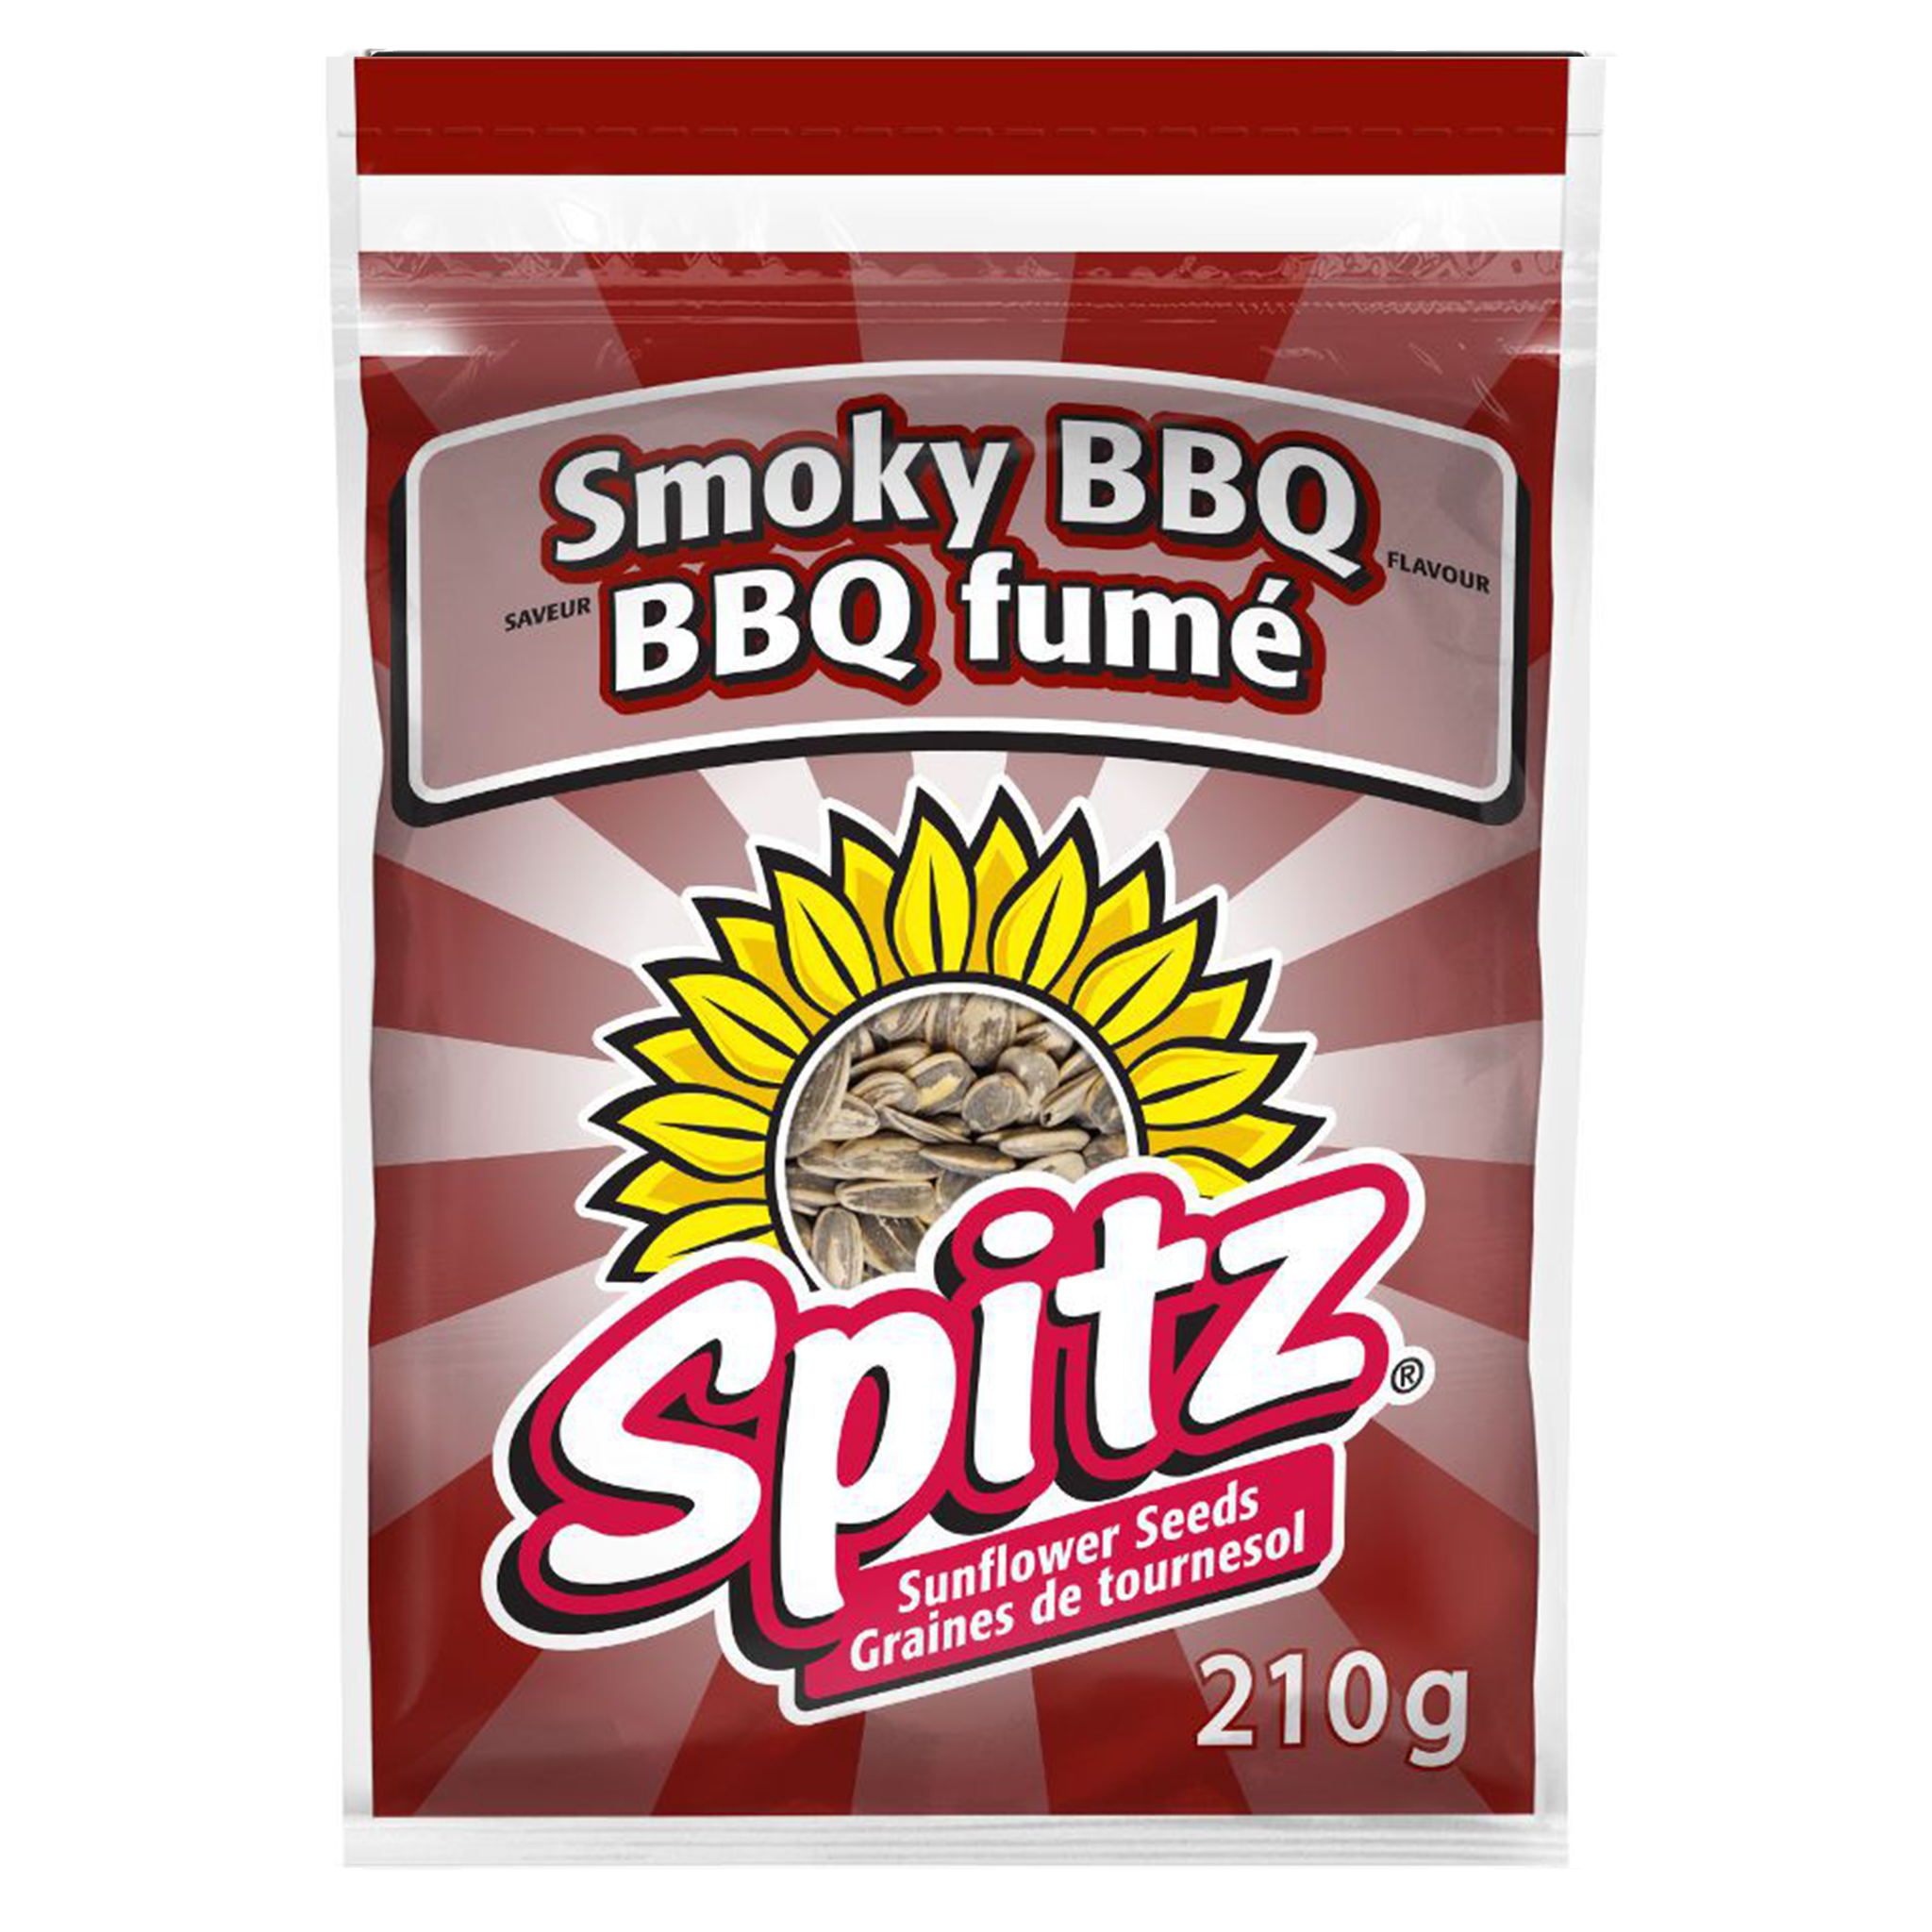 Spitz Sunflower Seeds - Smokey BBQ